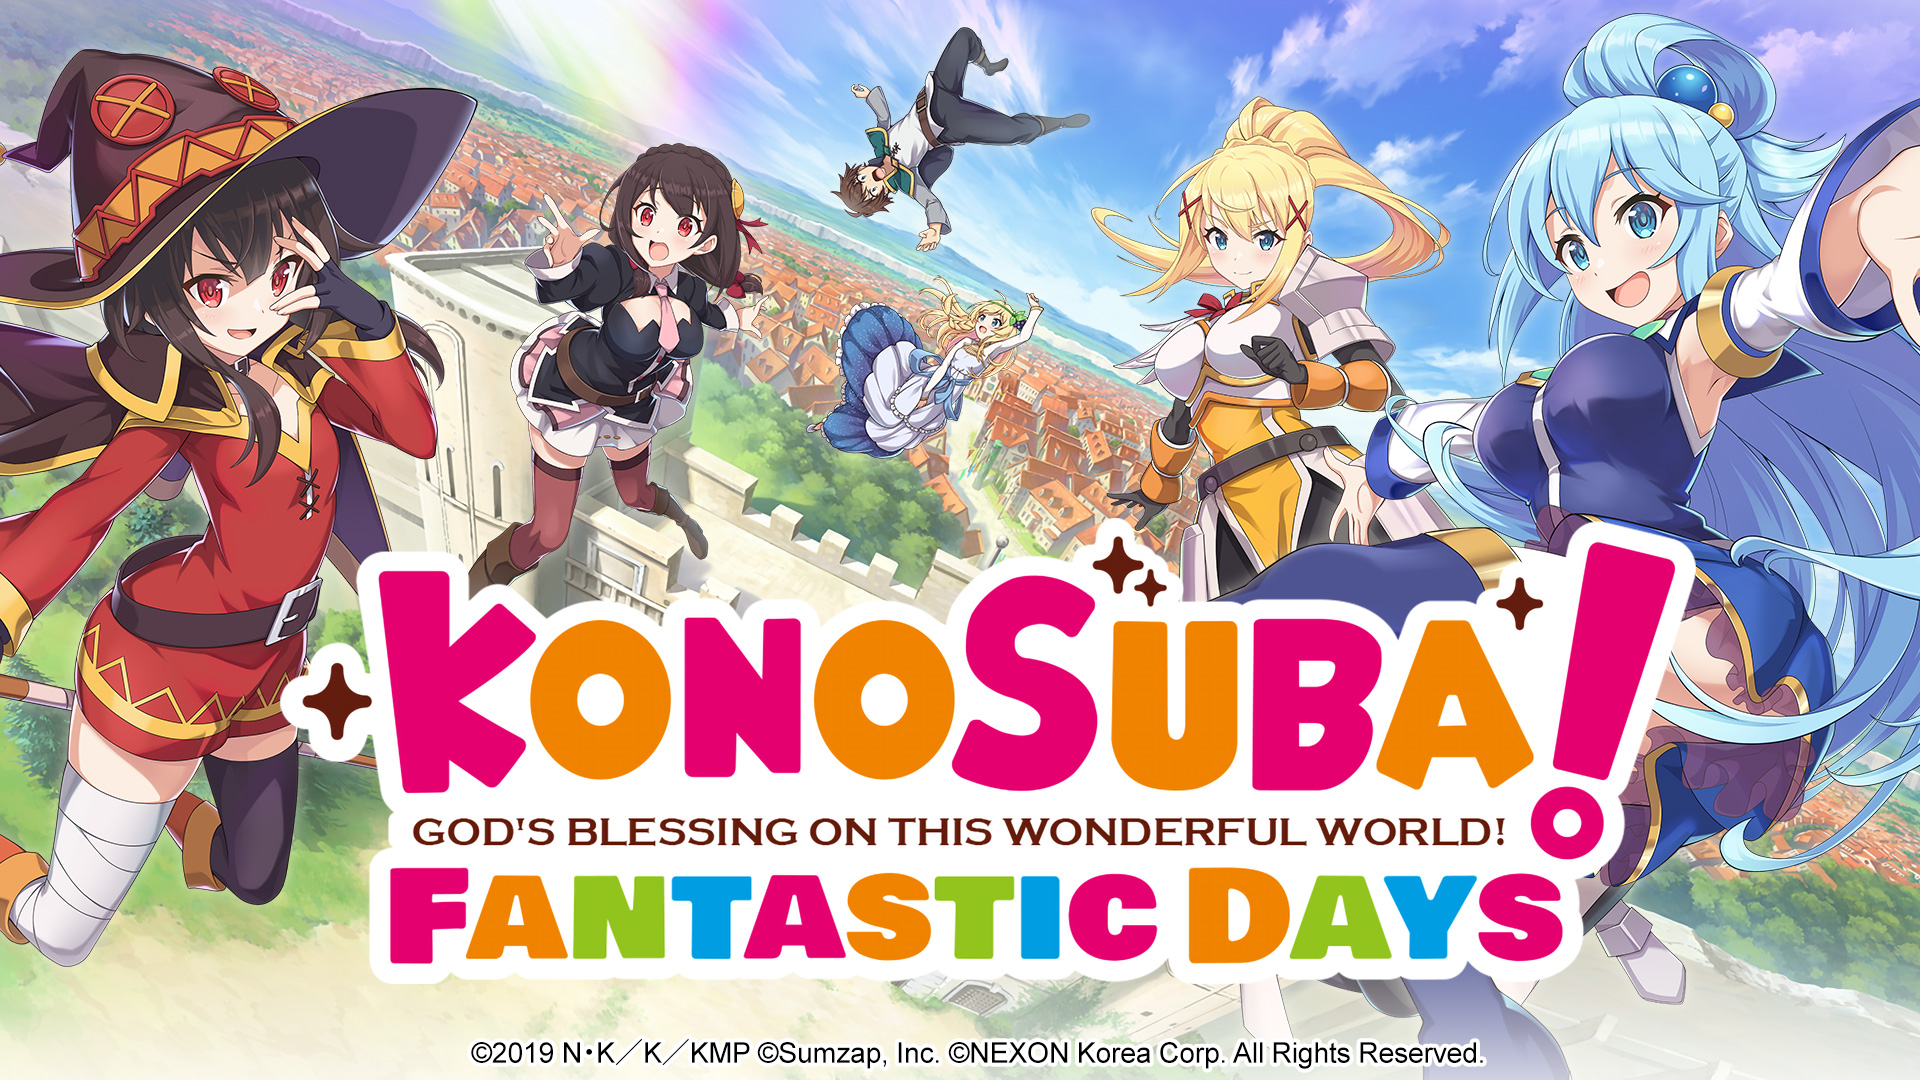 Trailer de KONOSUBA: An Explosion on This Wonderful World!